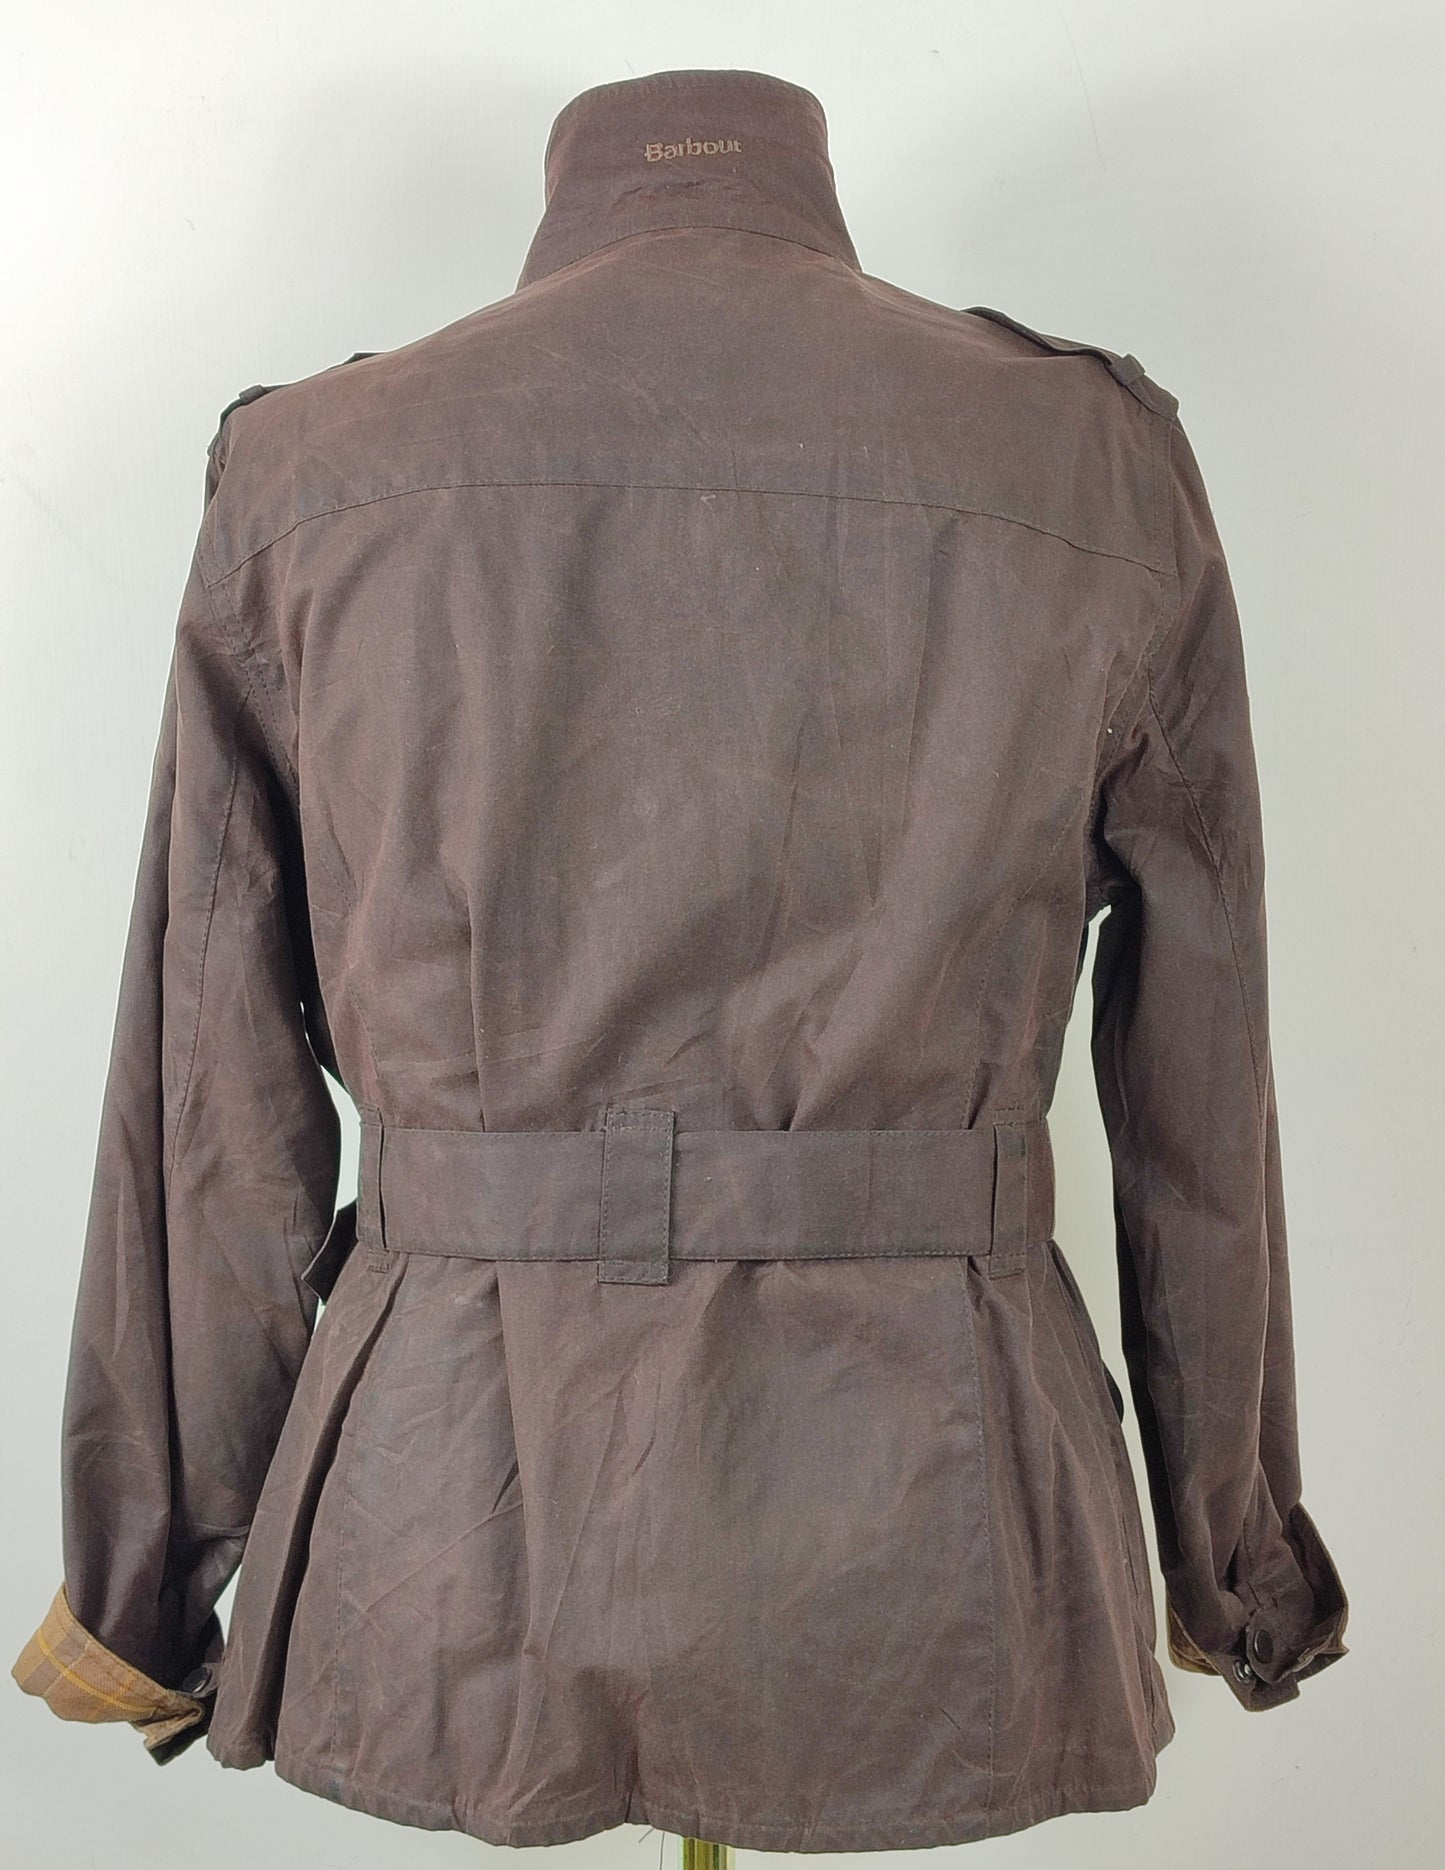 Giacca Barbour donna marrone corta Wax Amelia Medium -Brown lady Jacket Uk14